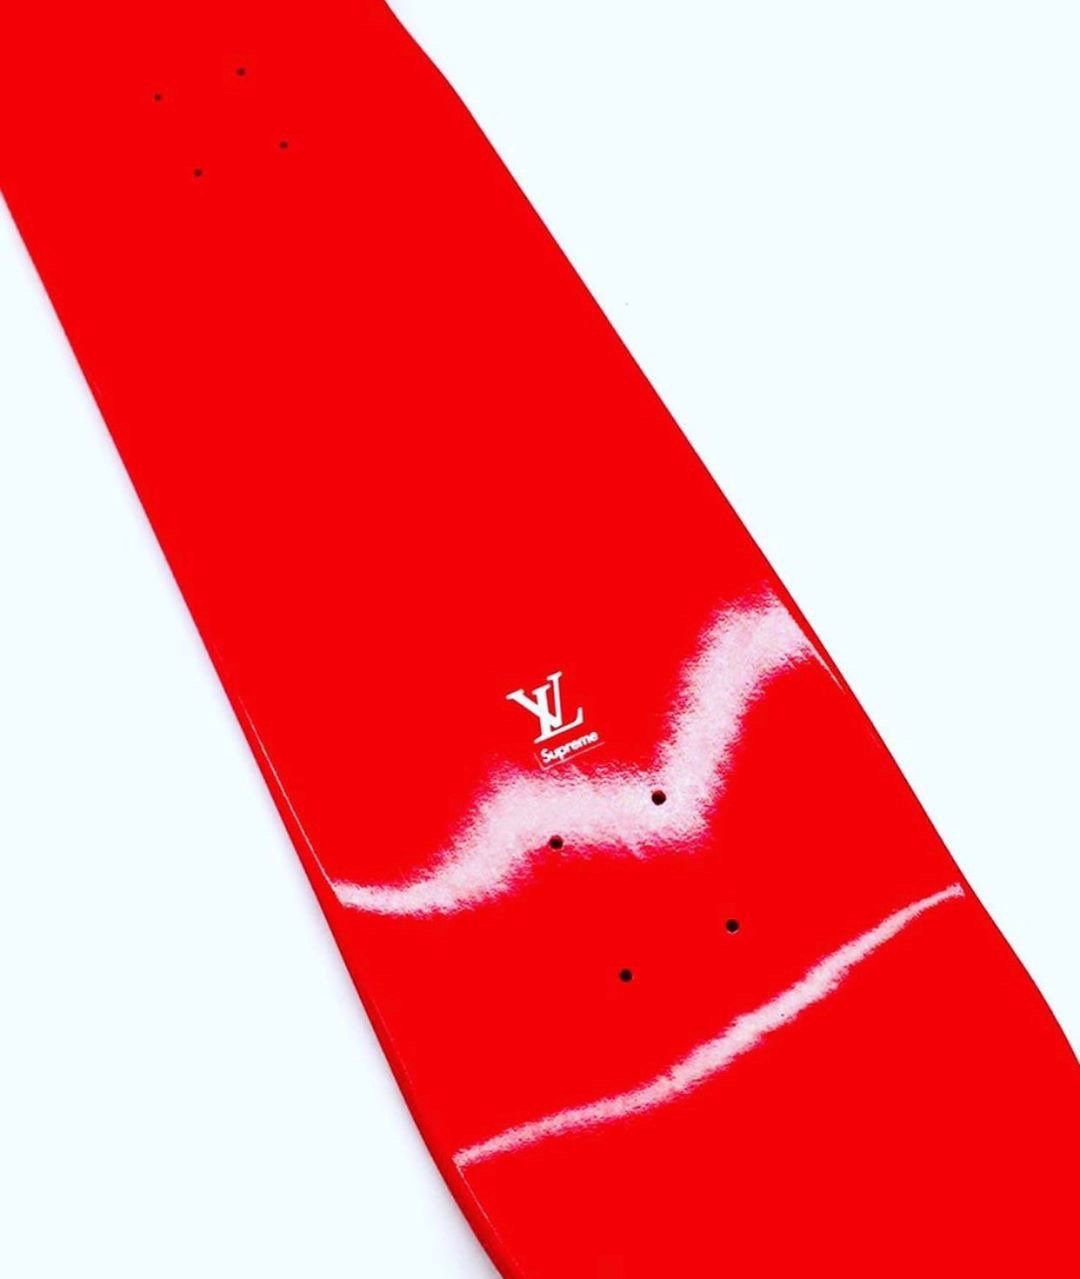 Supreme Louis Vuitton/supreme Boite Skateboard Trunk